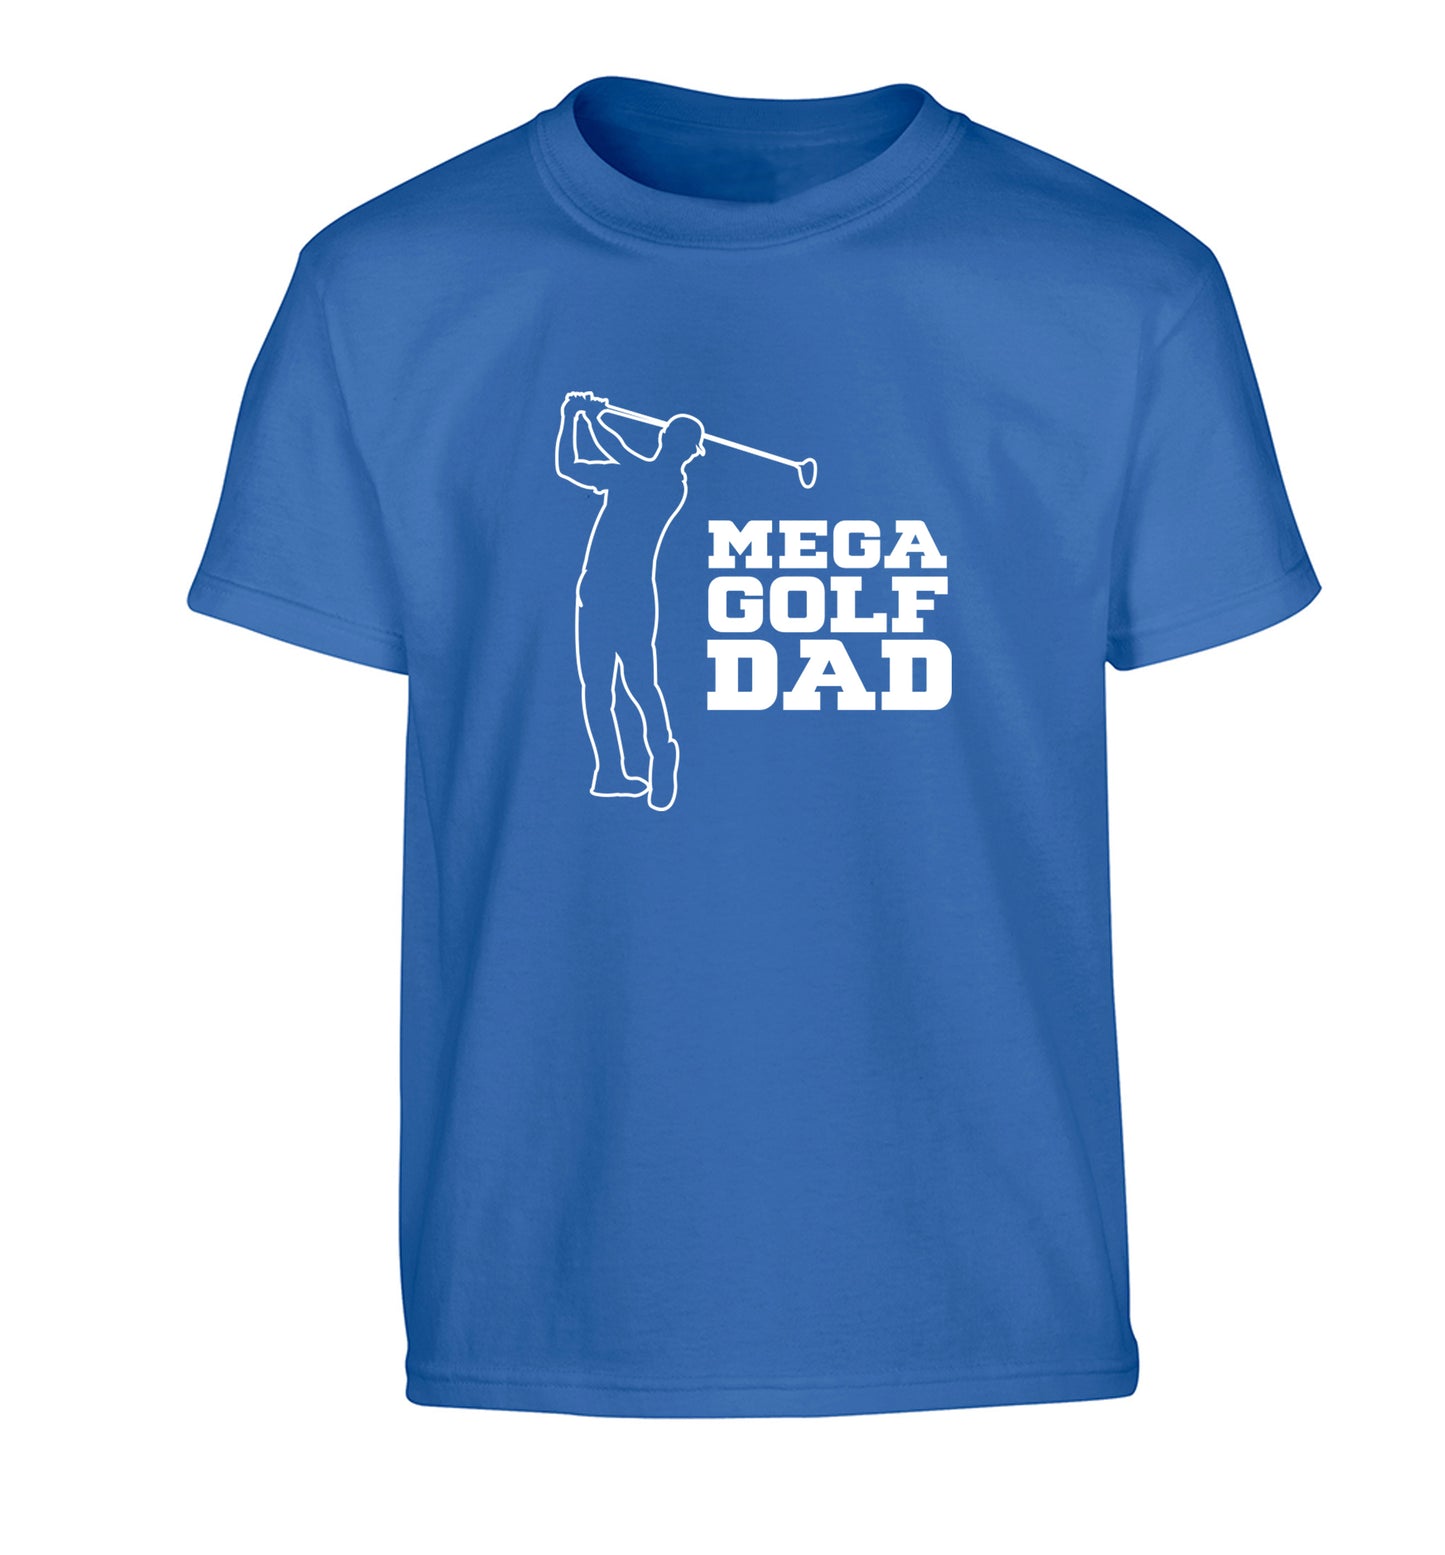 Mega golfing dad Children's blue Tshirt 12-13 Years